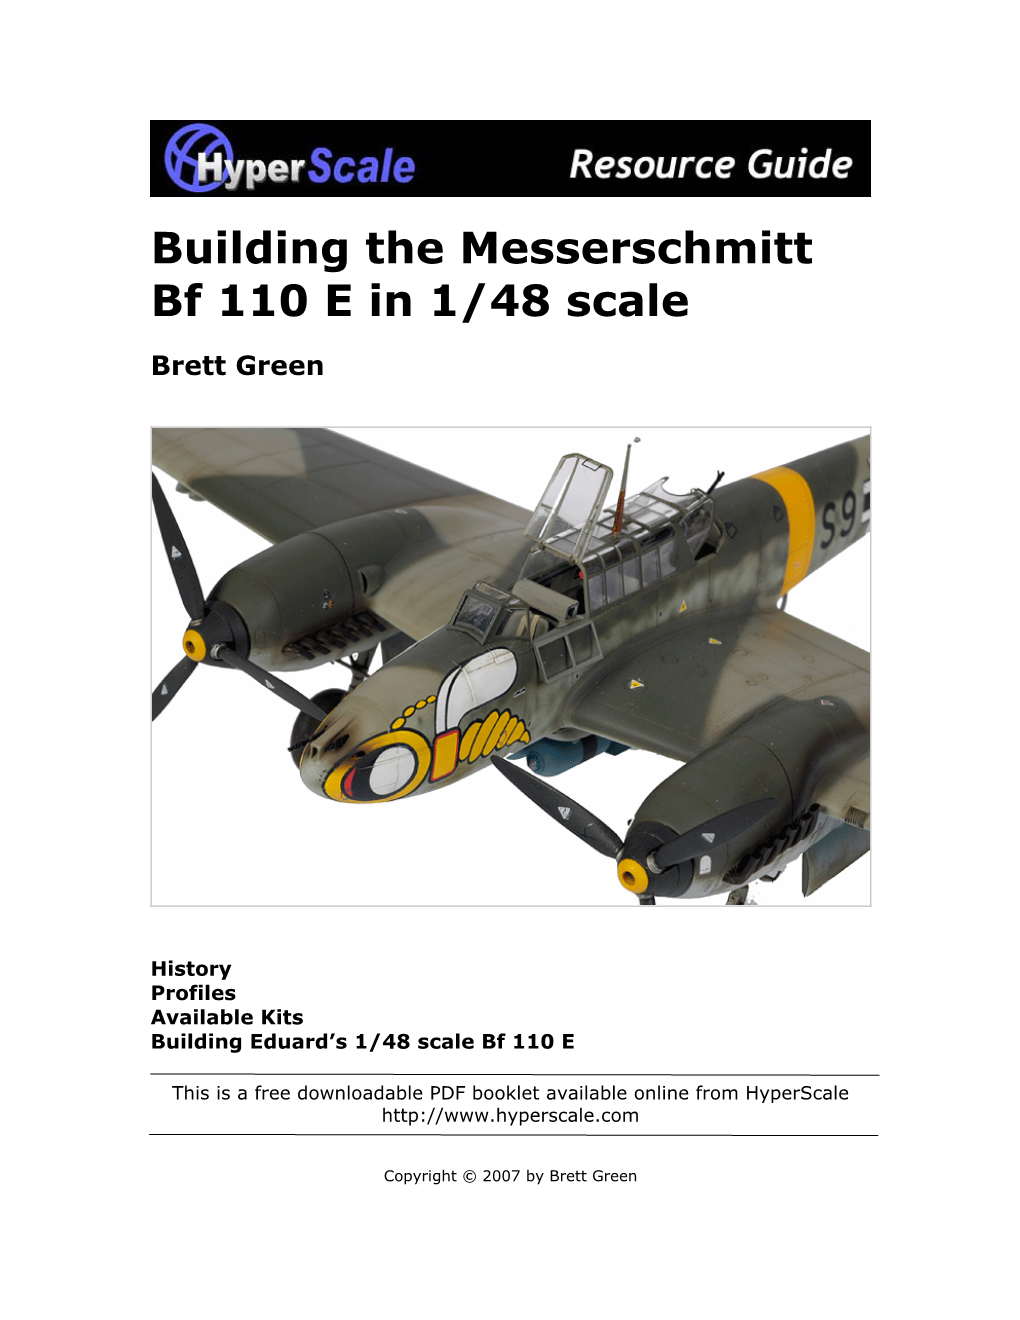 Building the Messerschmitt Bf 110 E in 1/48 Scale